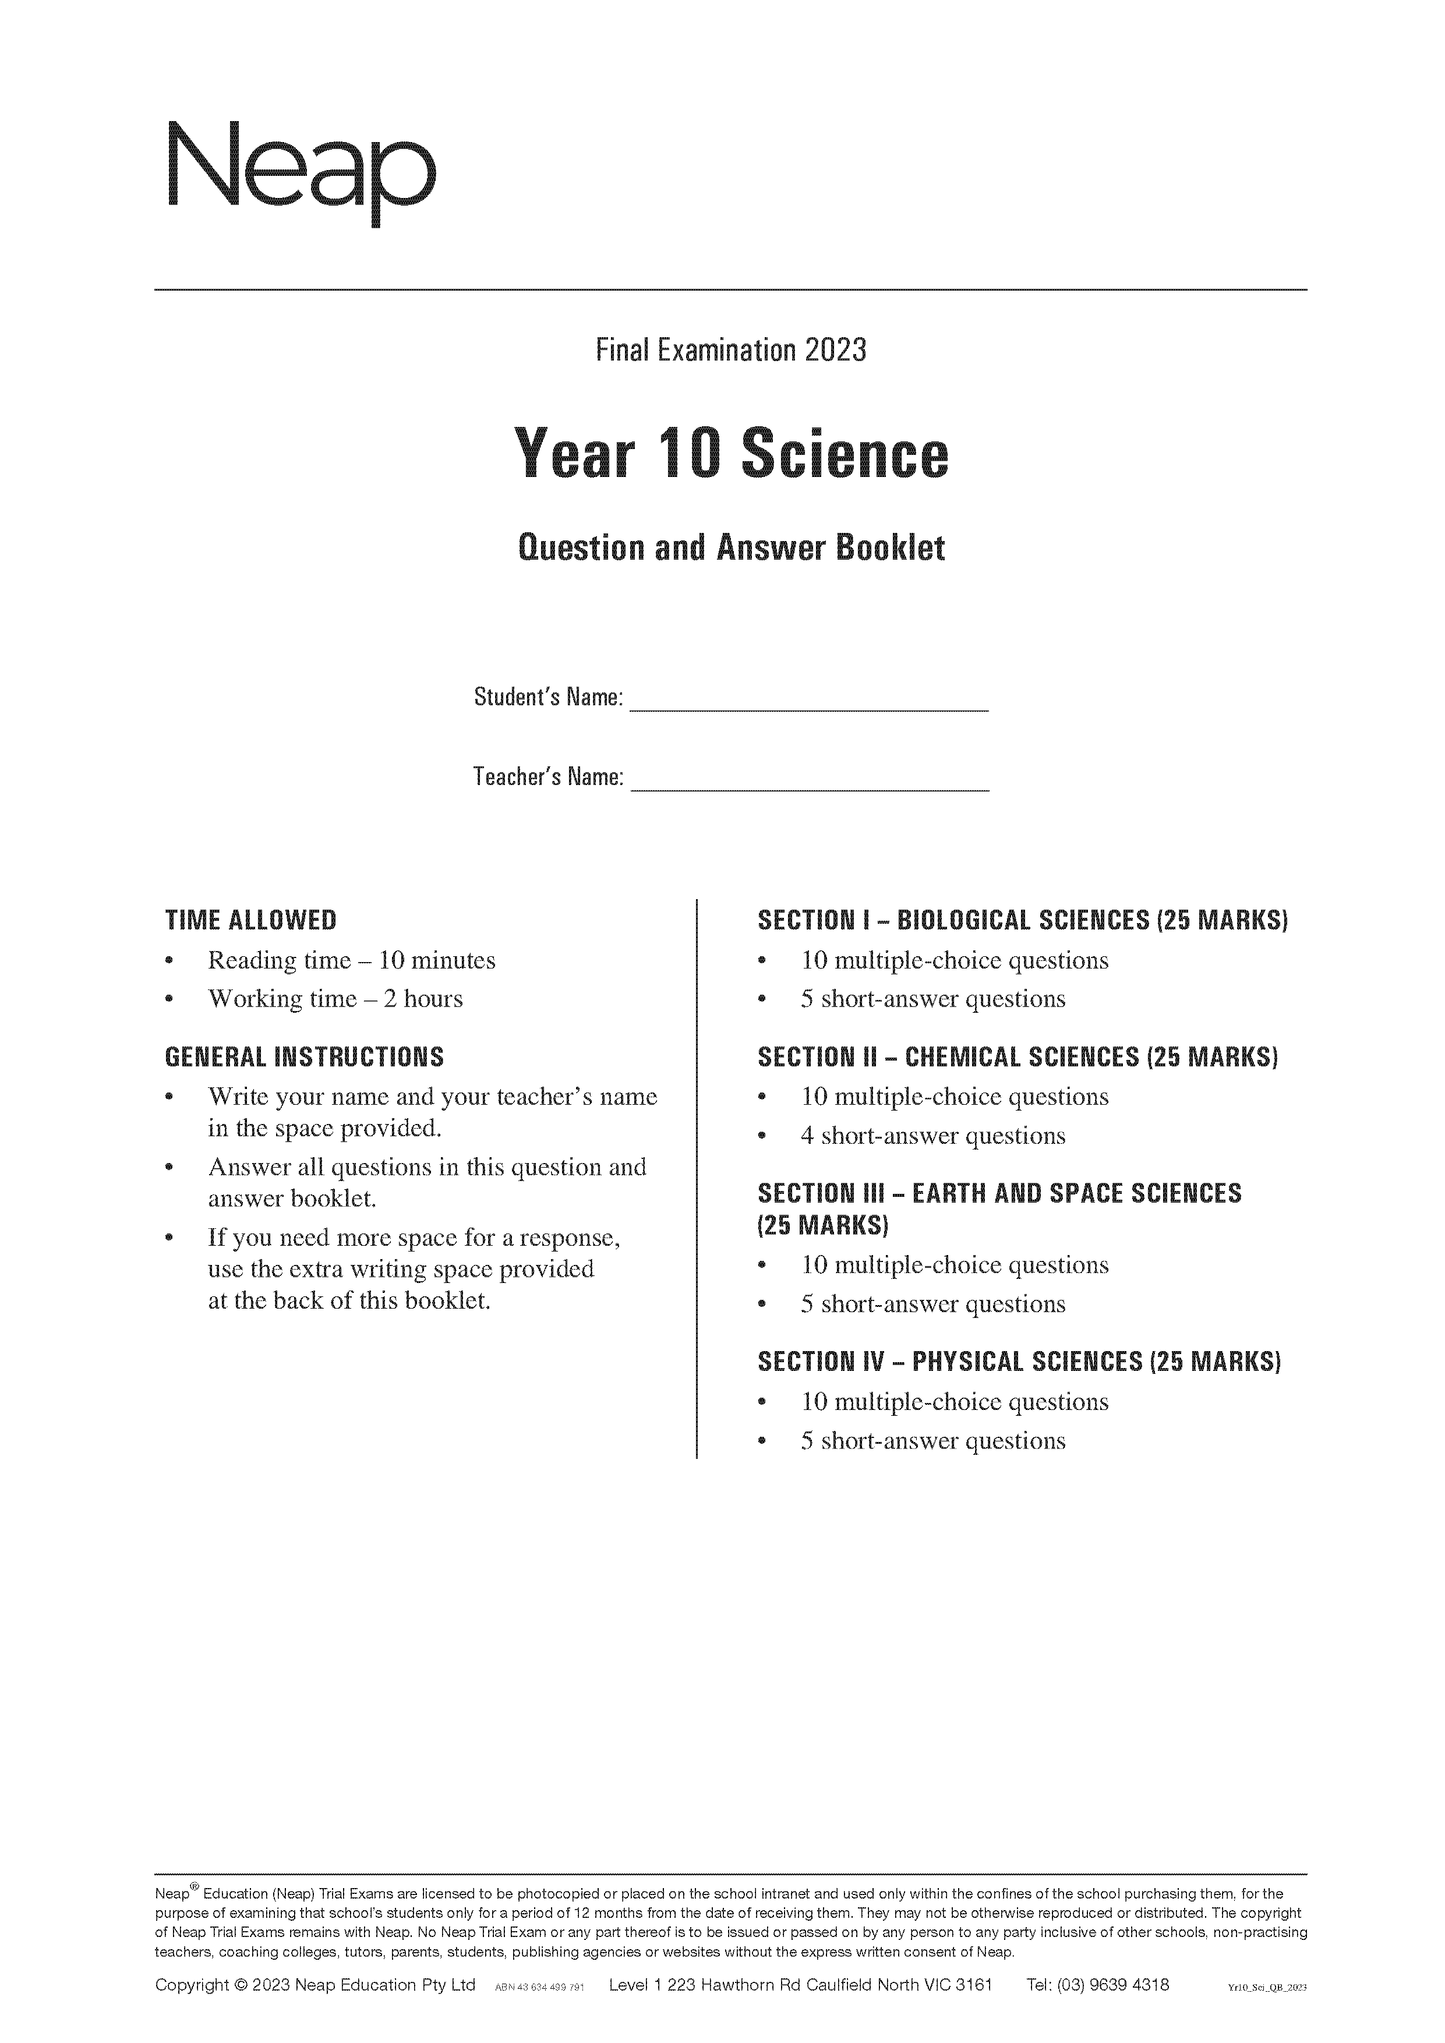 Neap Trial Exam: 2023 Year 10 Science